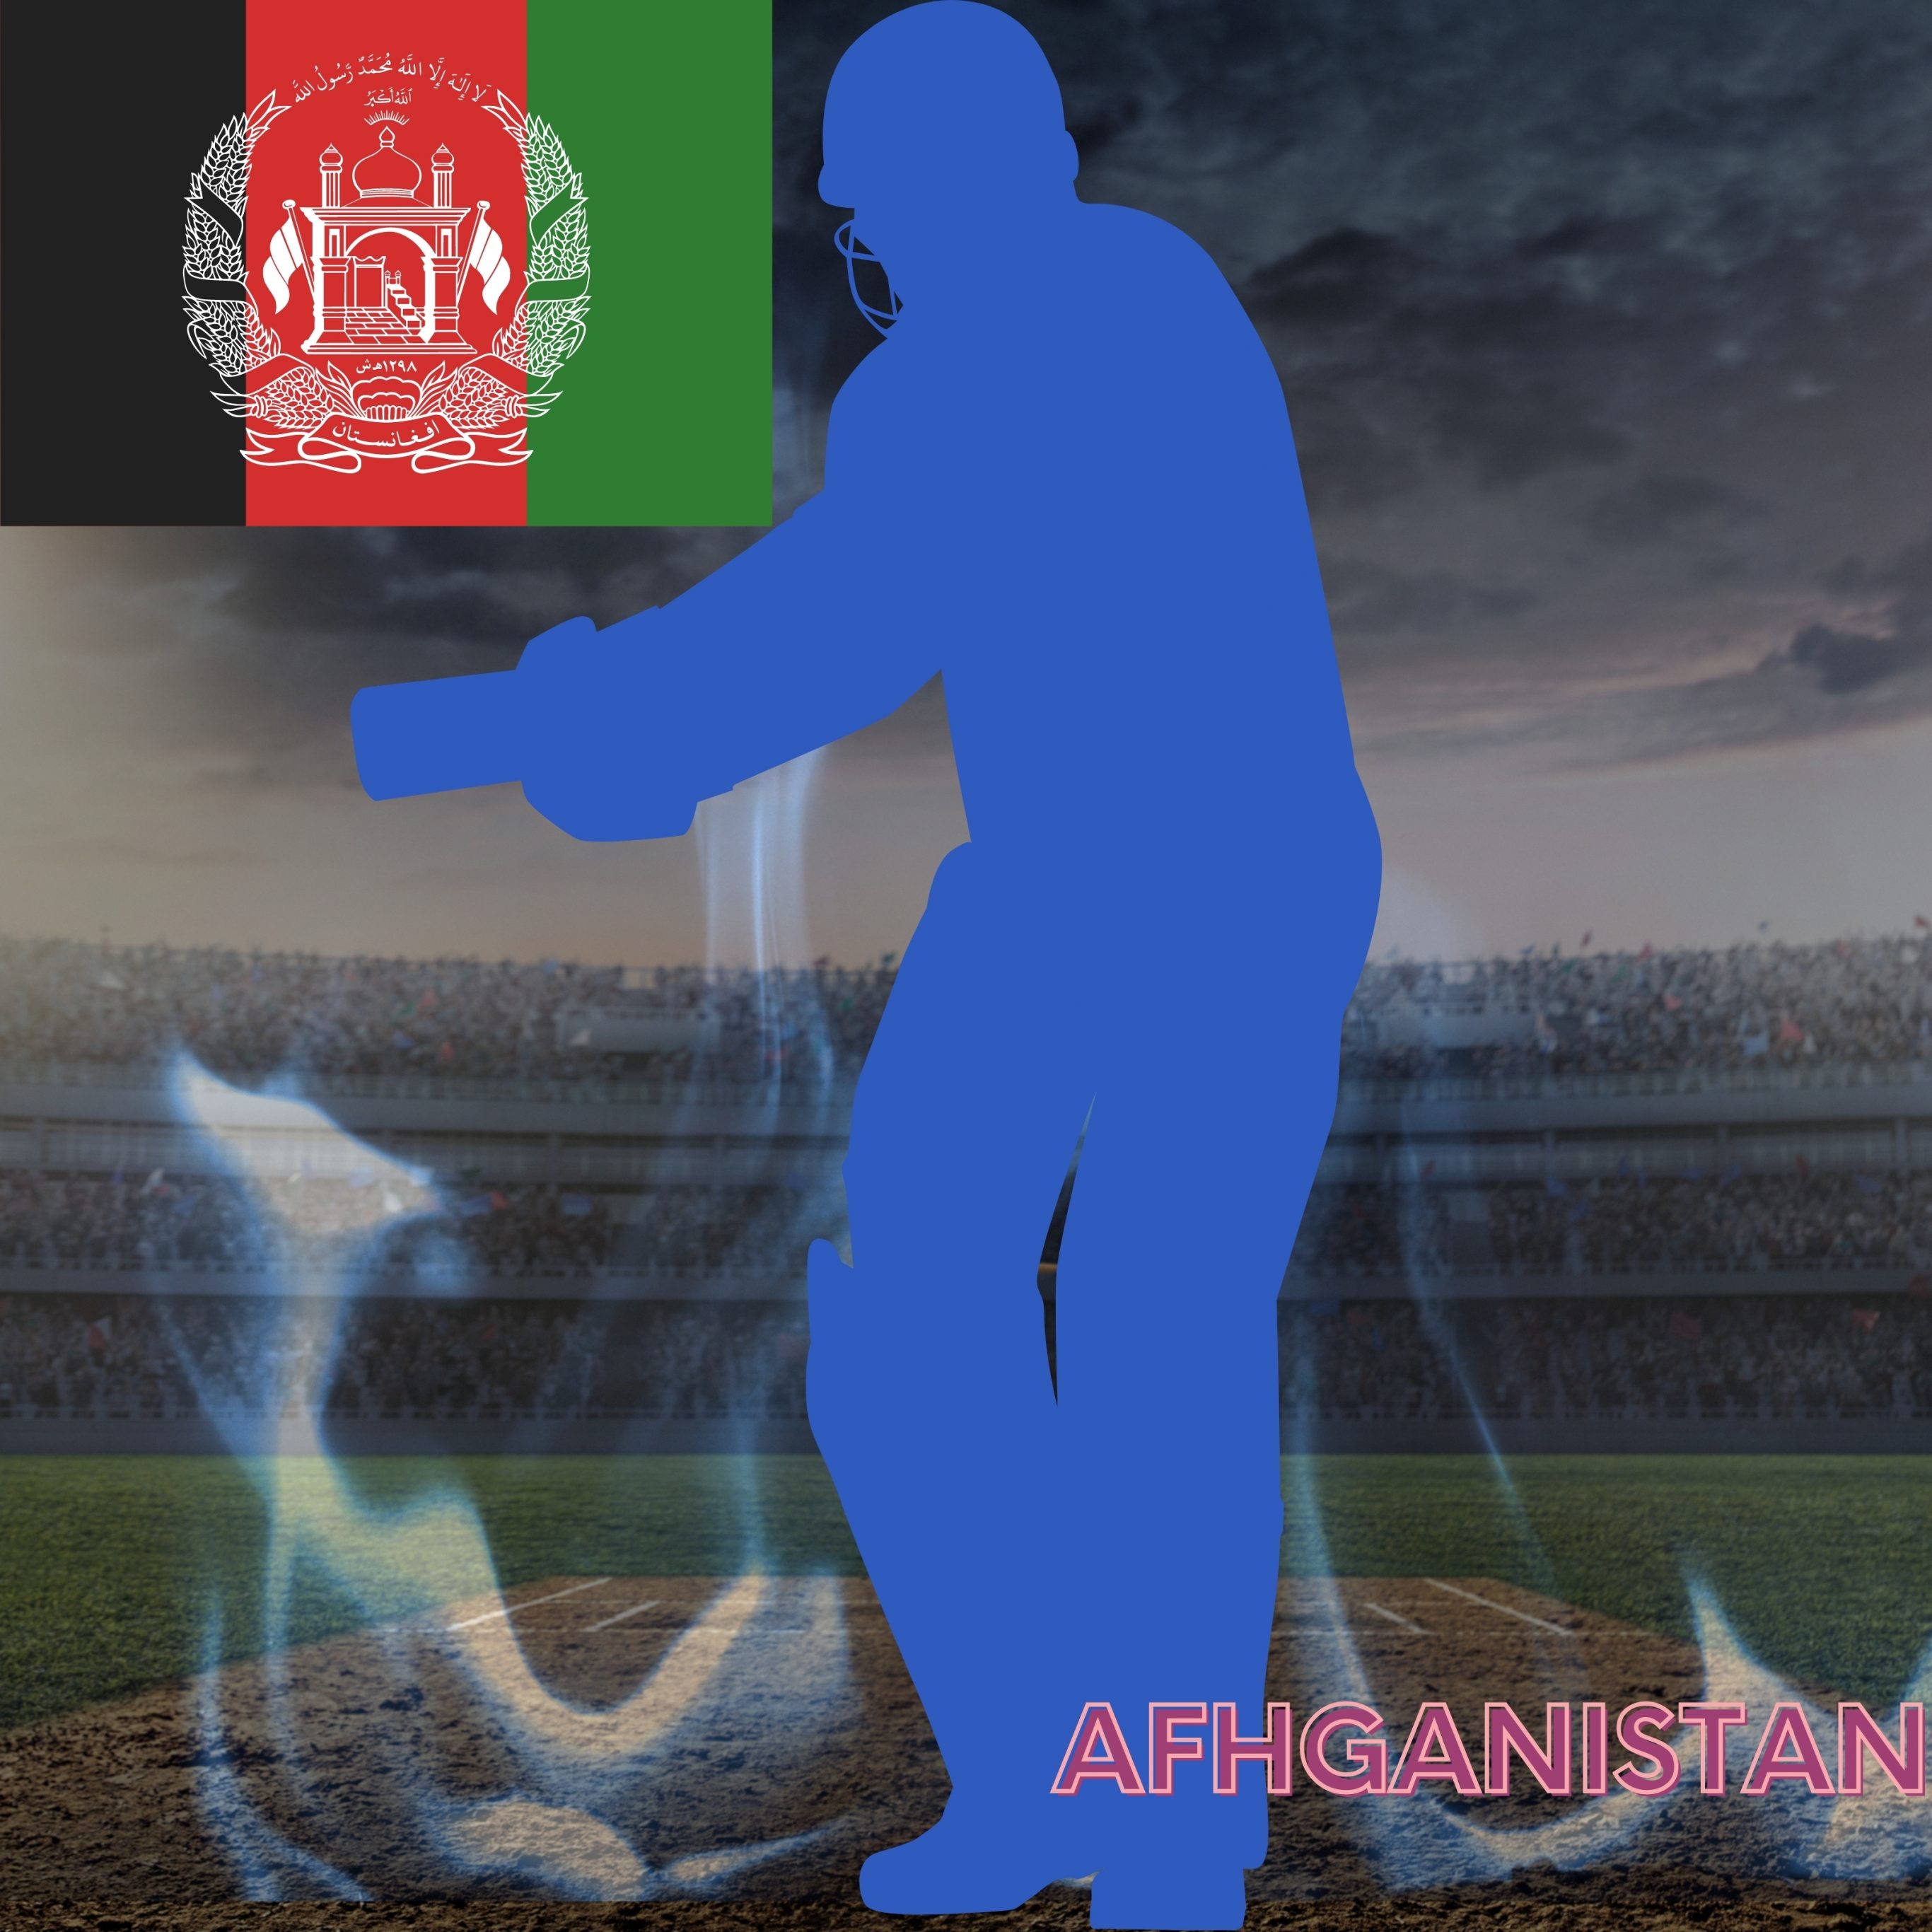 2732x2732 wallpapers 4k iPad Pro Afhganistan Cricket Stadium iPad Wallpaper 2732x2732 pixels resolution